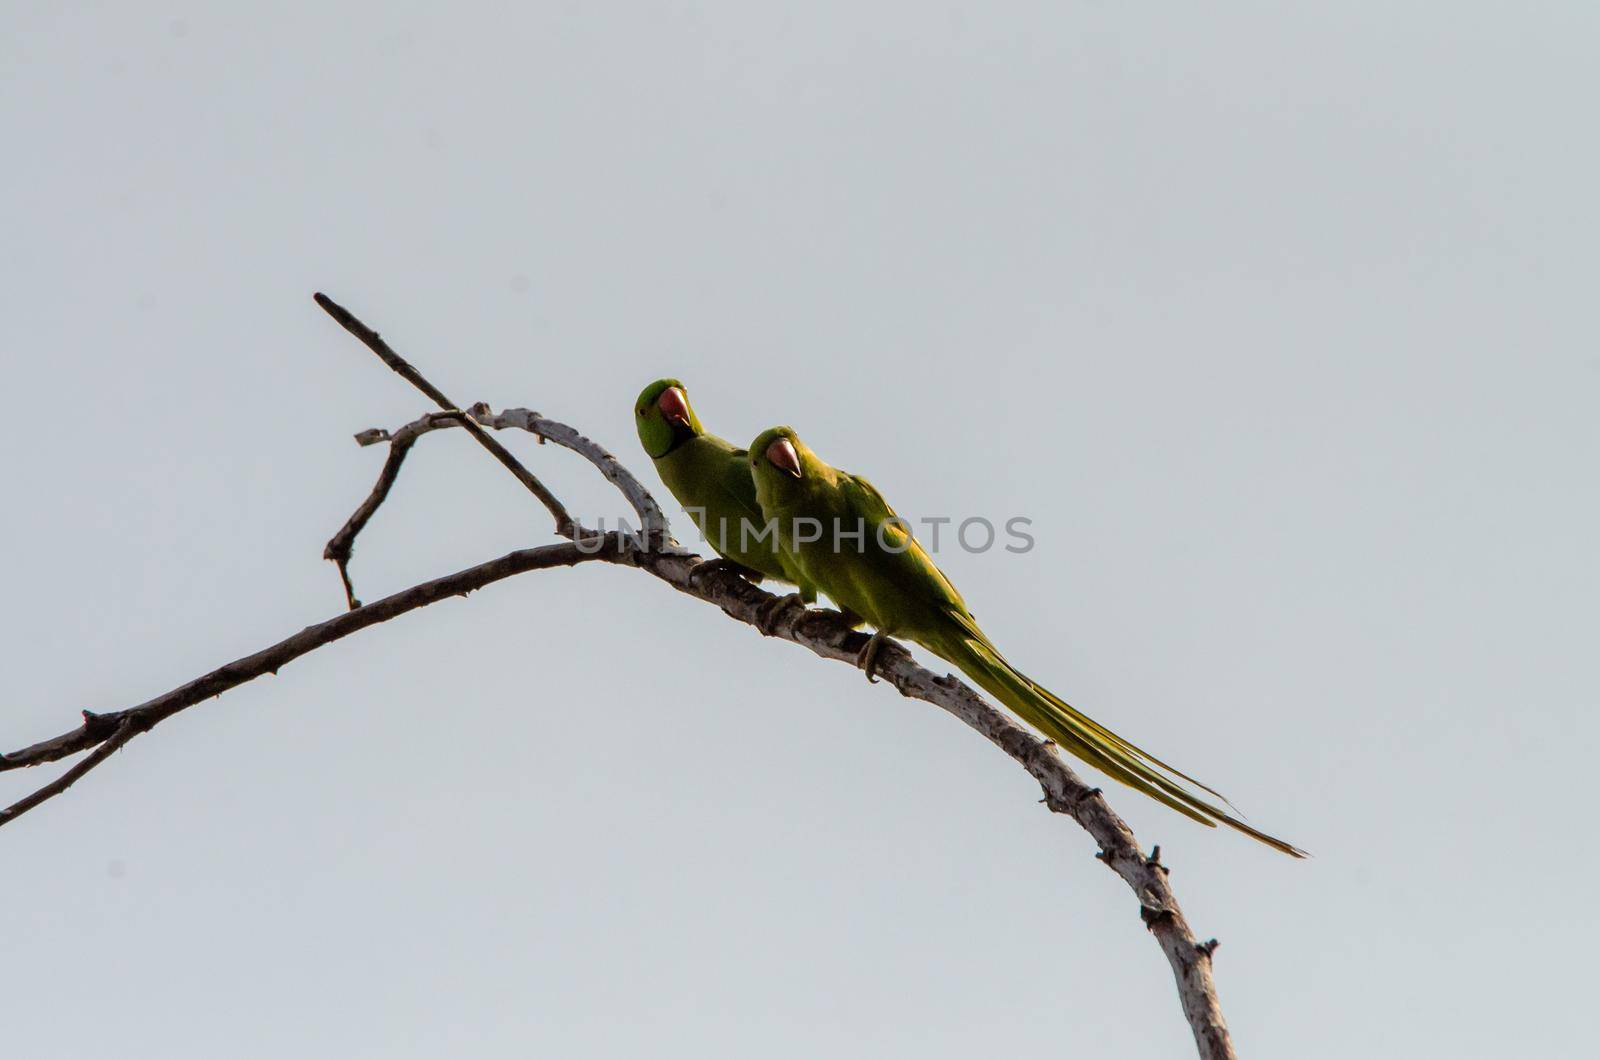 Lovely green bird in pair.